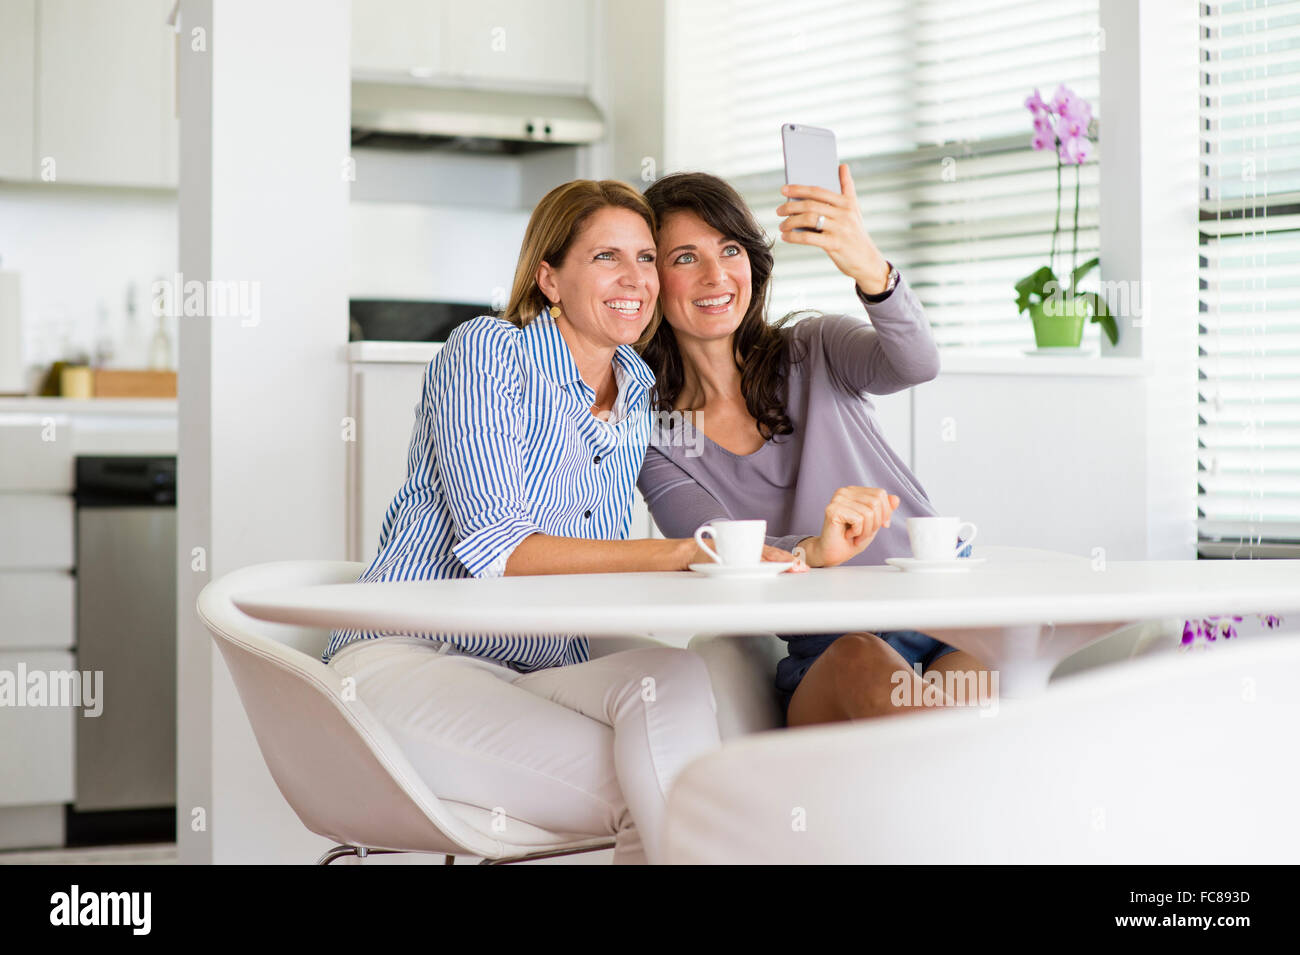 Caucasian women taking selfie in kitchen Stock Photo